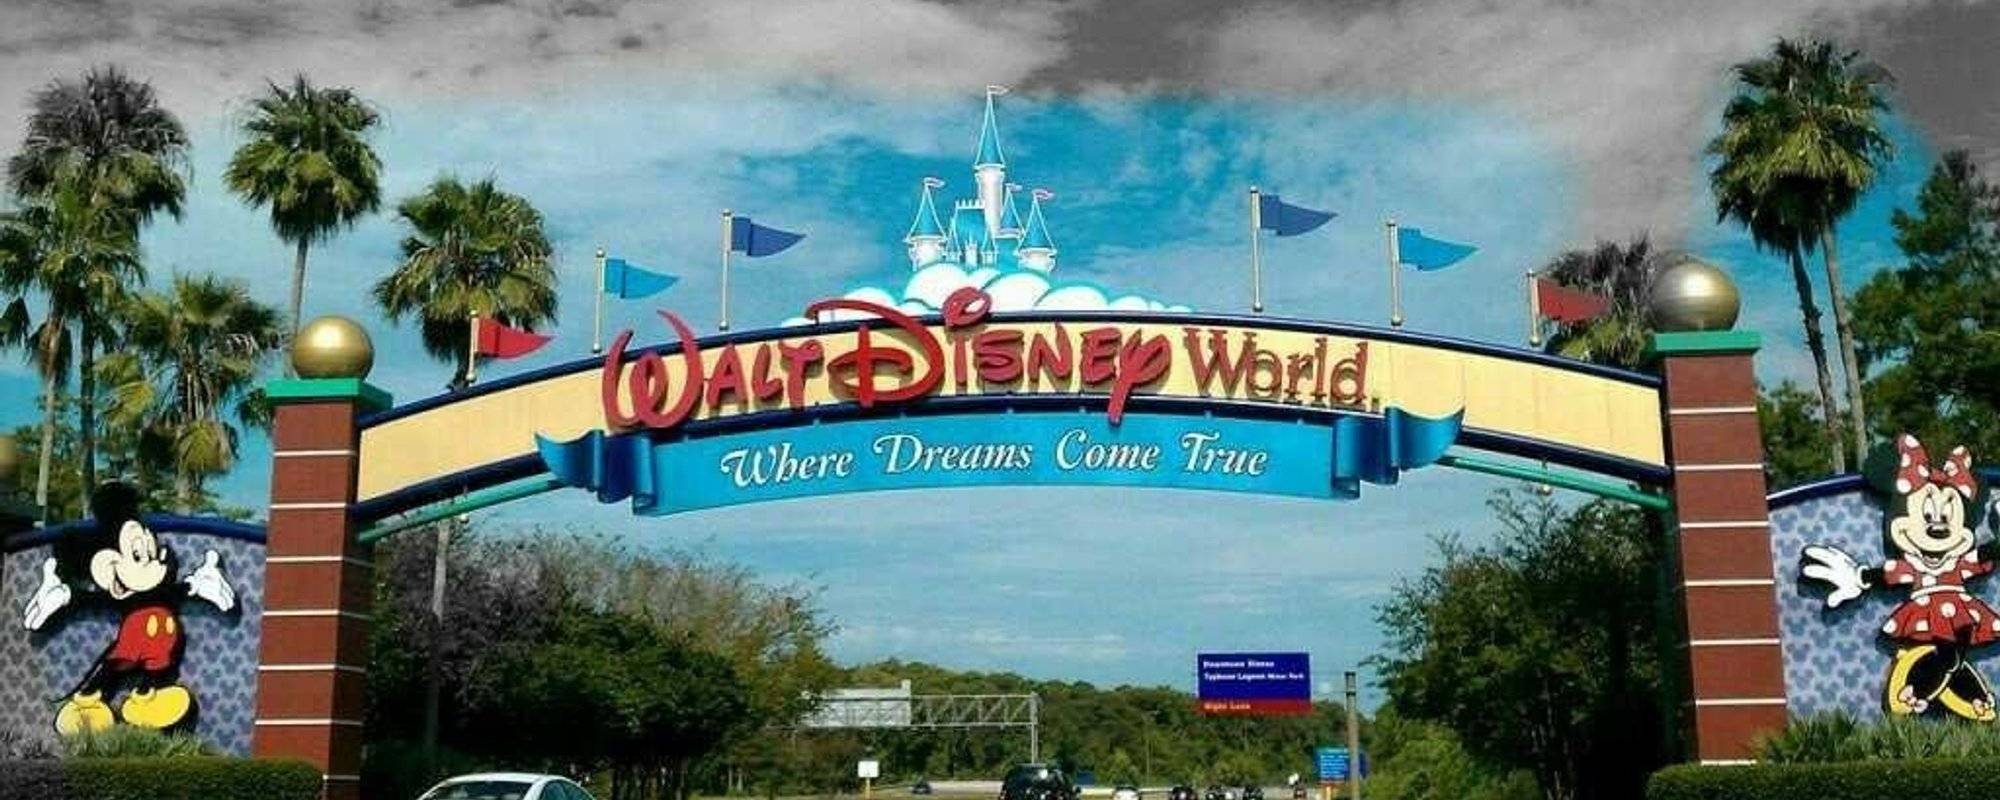 Walt Disney World is a strange country and a dream destination.